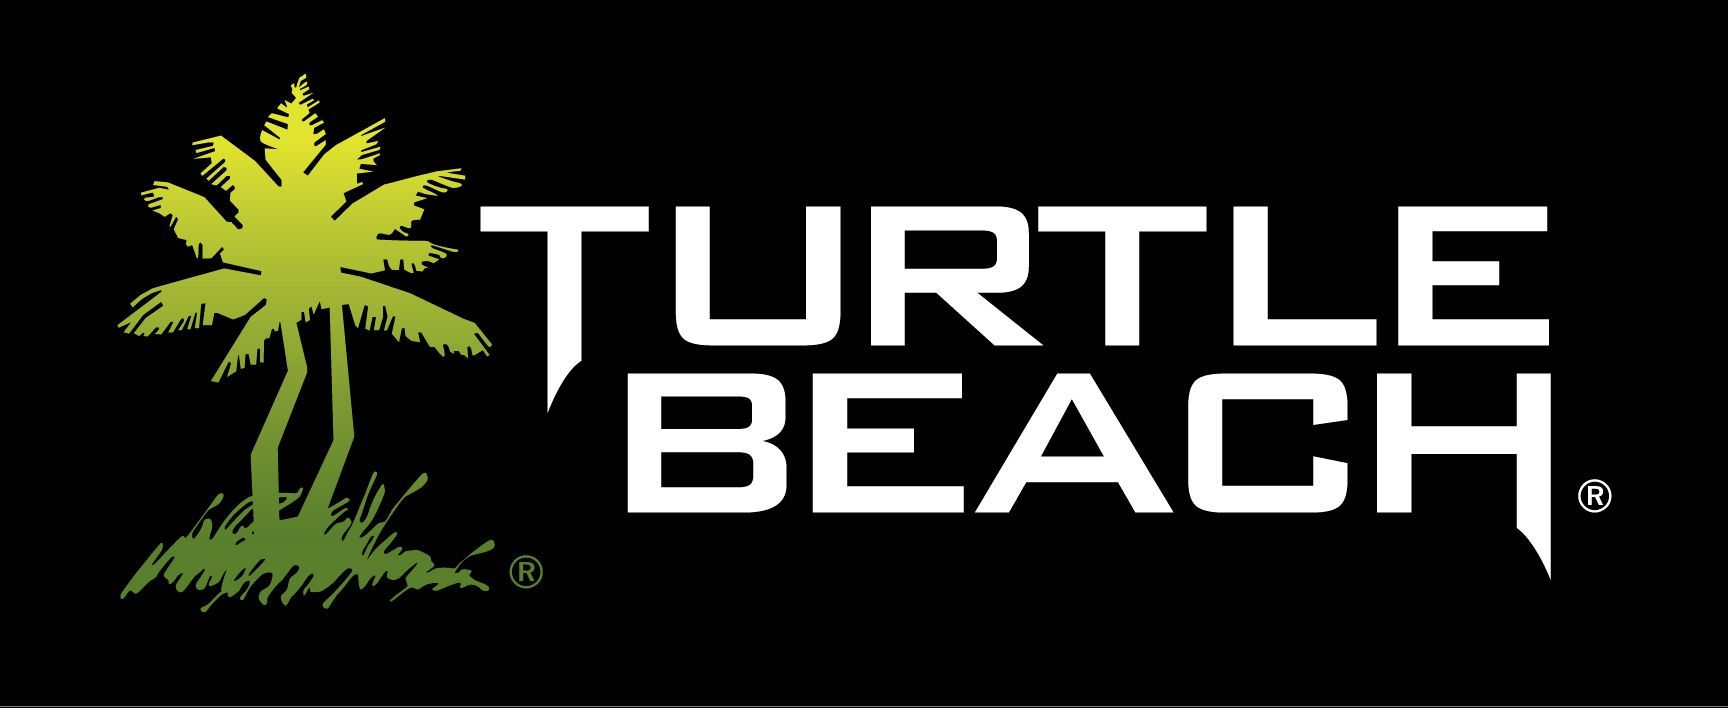 Turtle Beach Logo Wallpaper Free Turtle Beach Logo Background